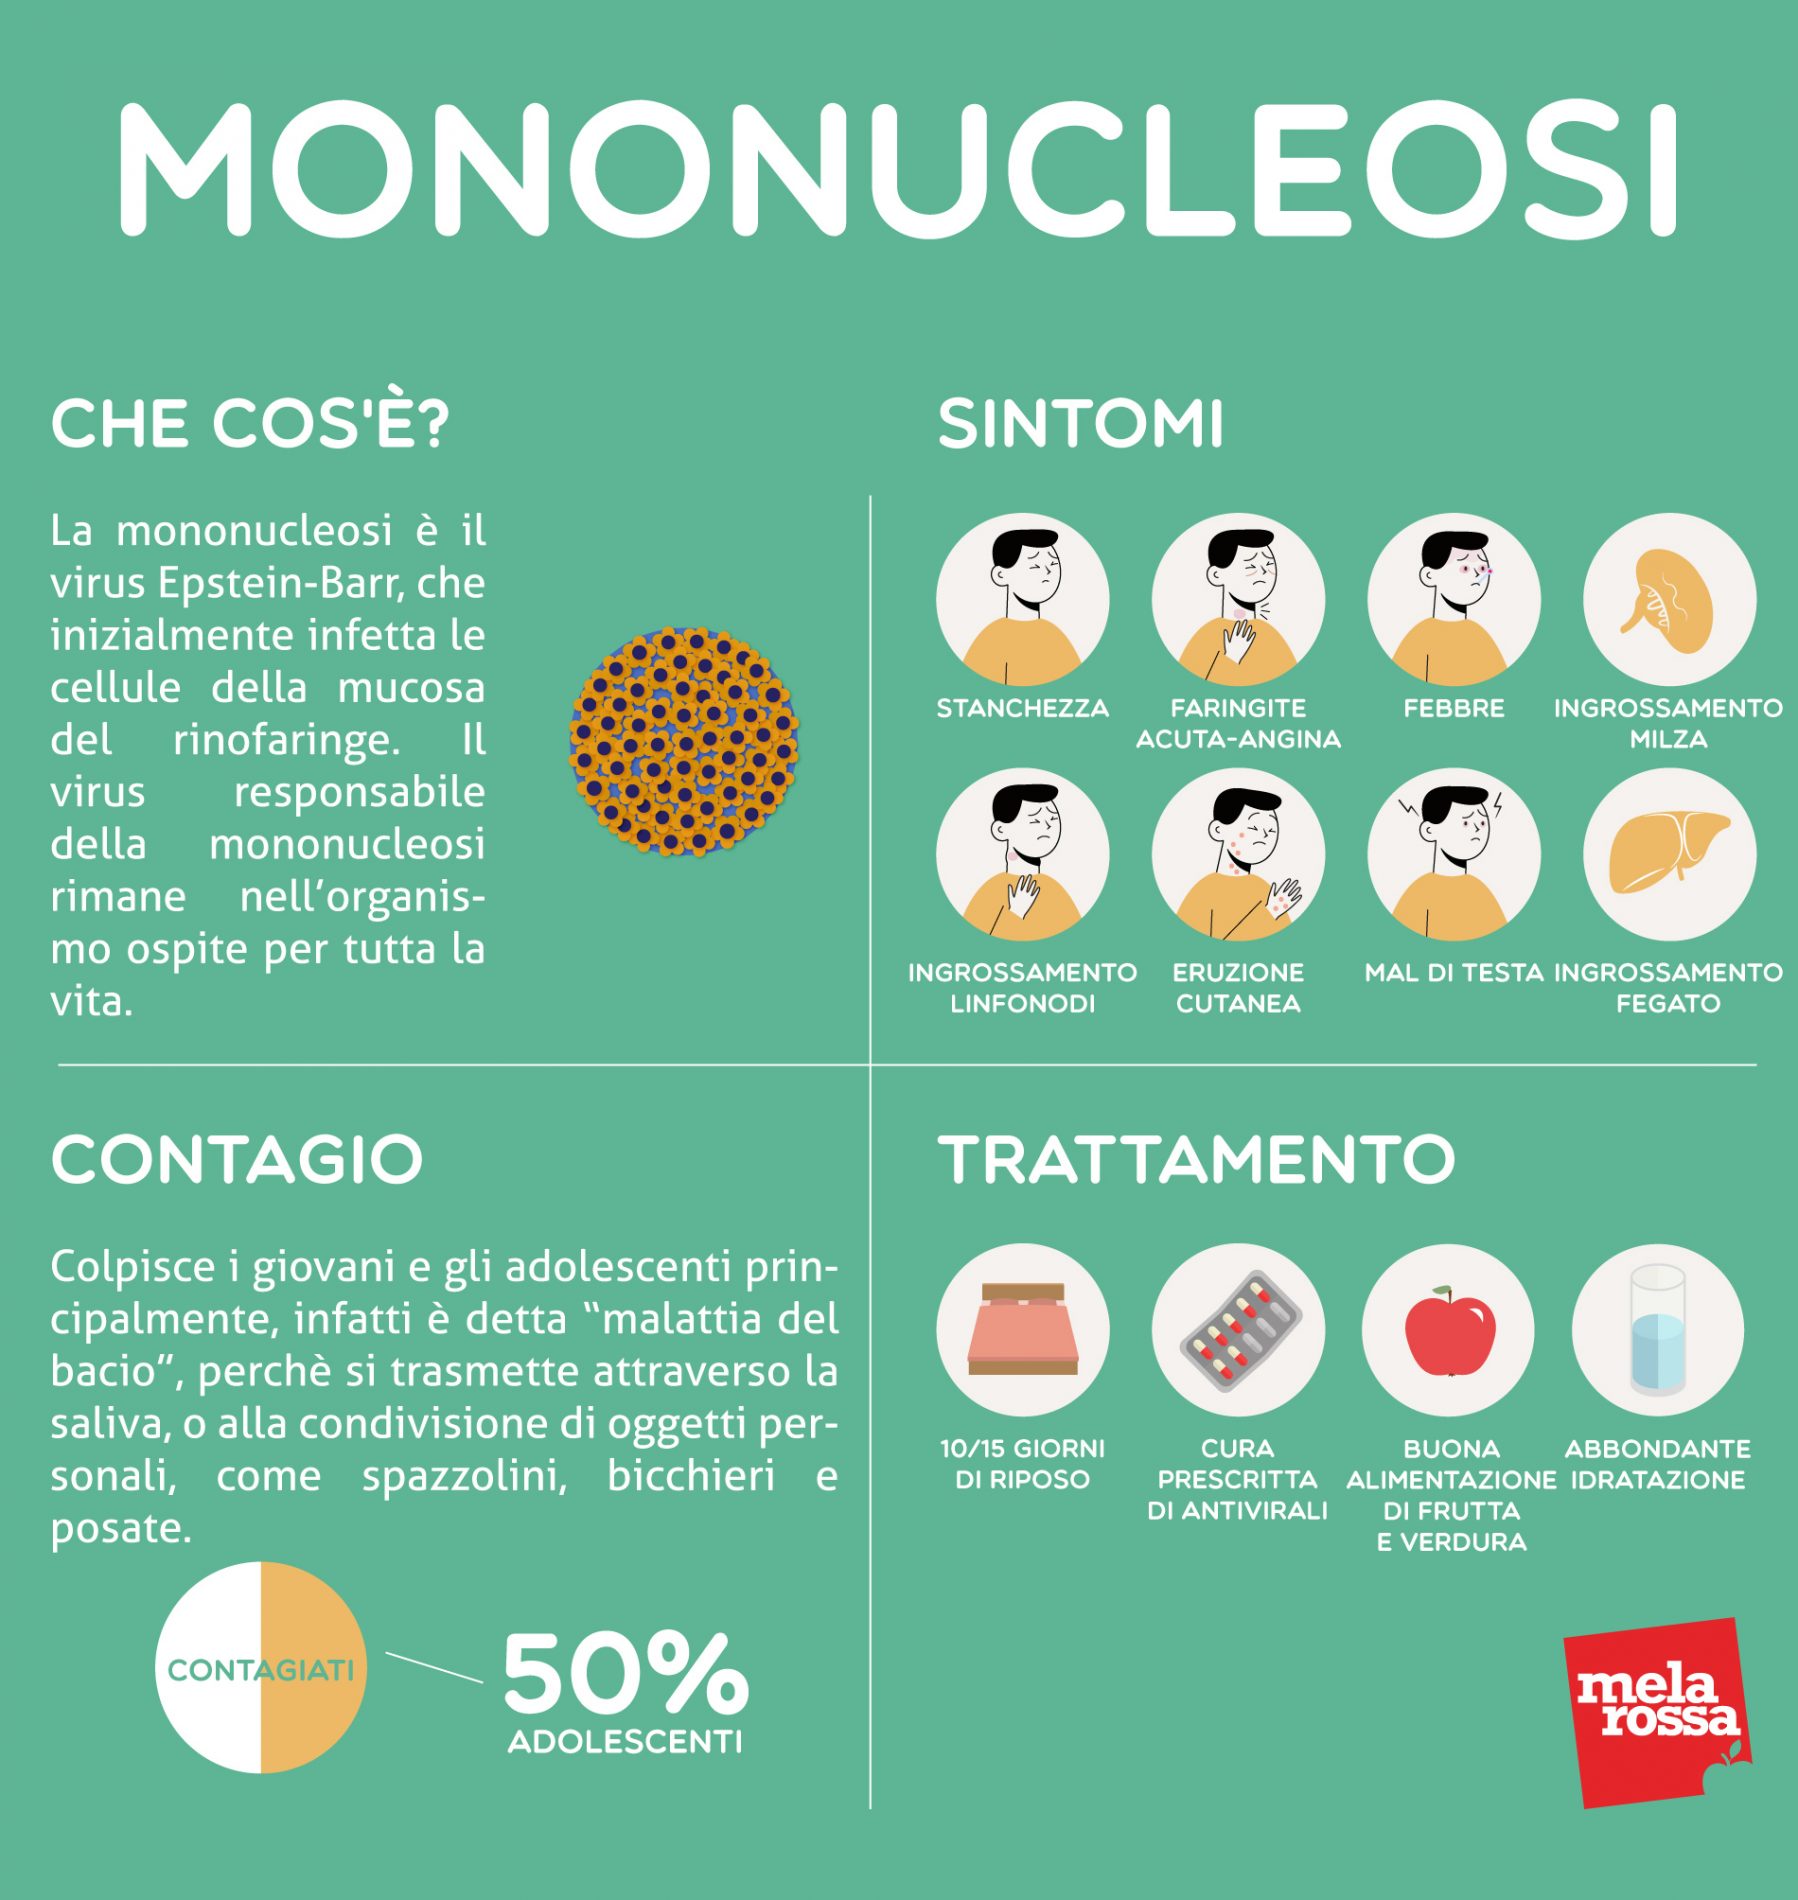 mononucleosi: infografica 